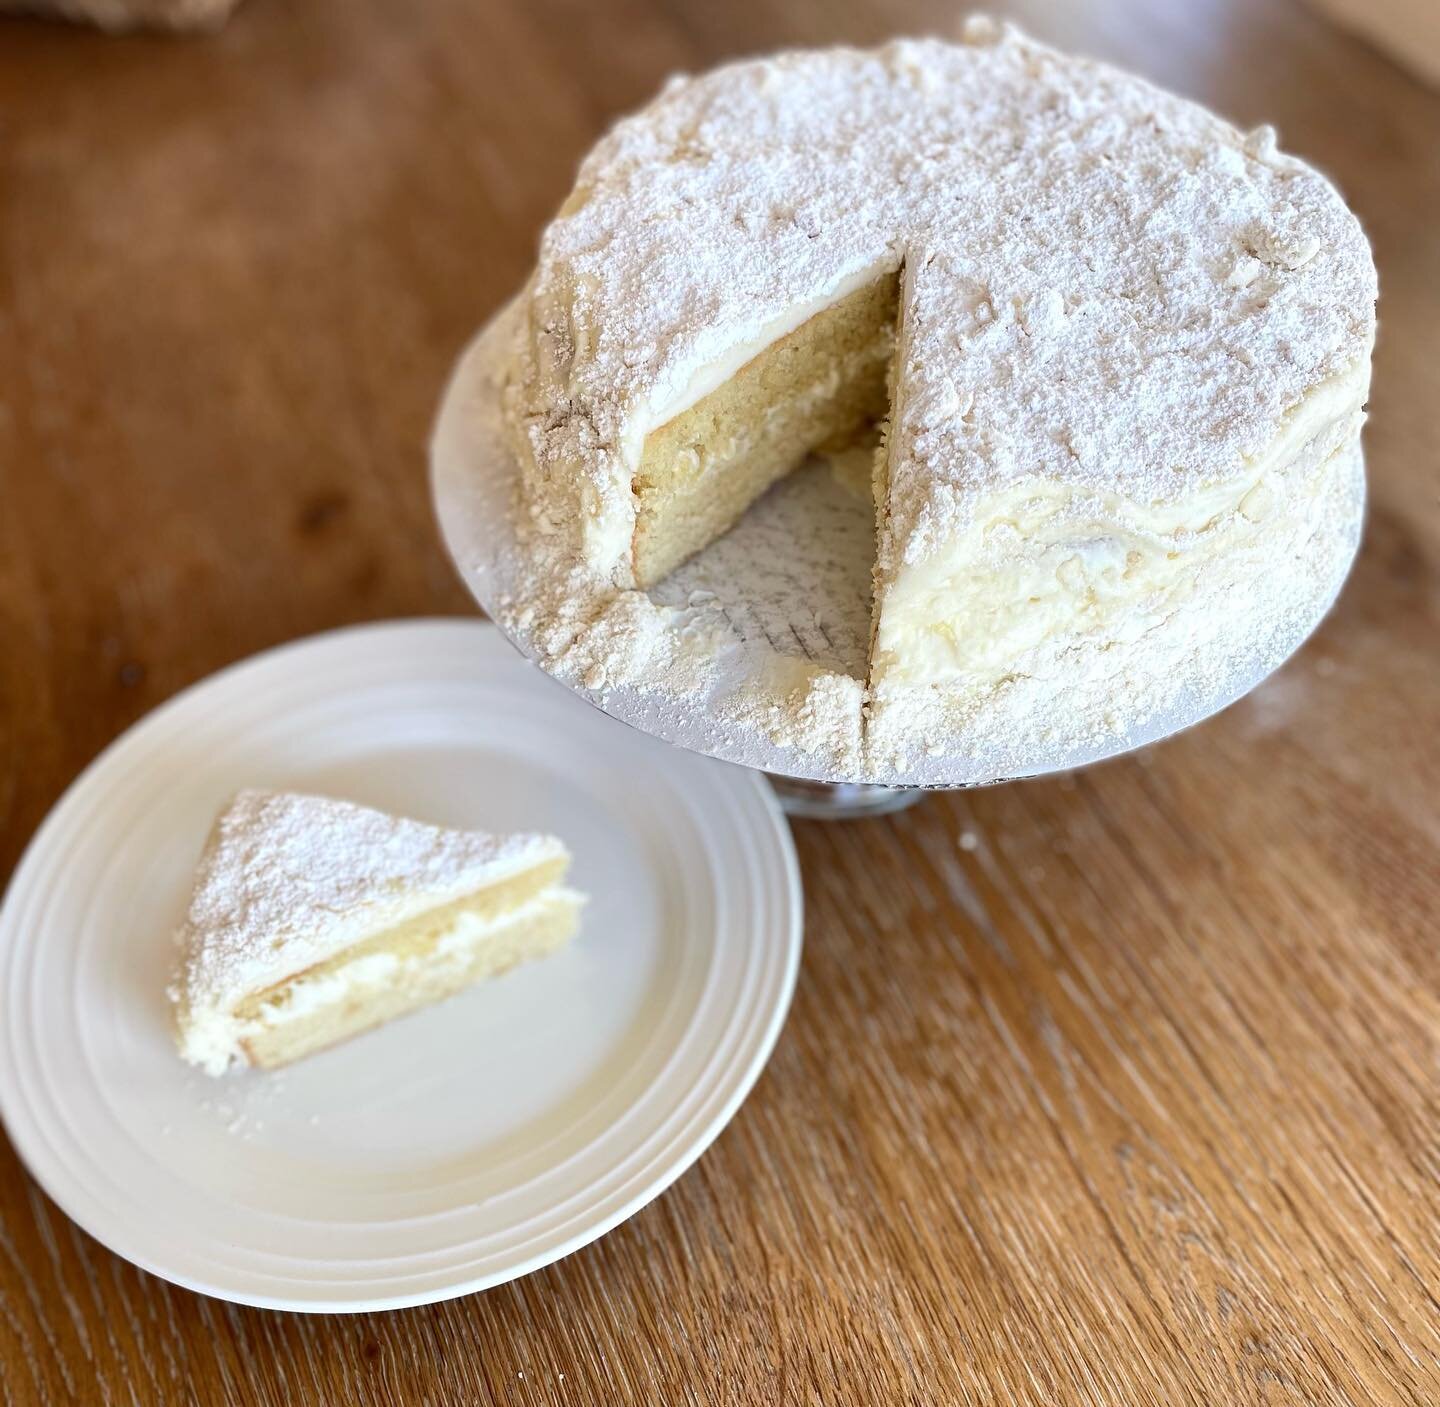 Italian Lemon Cream Cake 🍰 custom cake&rsquo;s are available, message me! 

#lemon #lemoncake #cheesecake #homemade #artisan #bread #baking #homebaking #microbakery #cake #italian #sugar #sweet #virginiabeach #hamptonroads